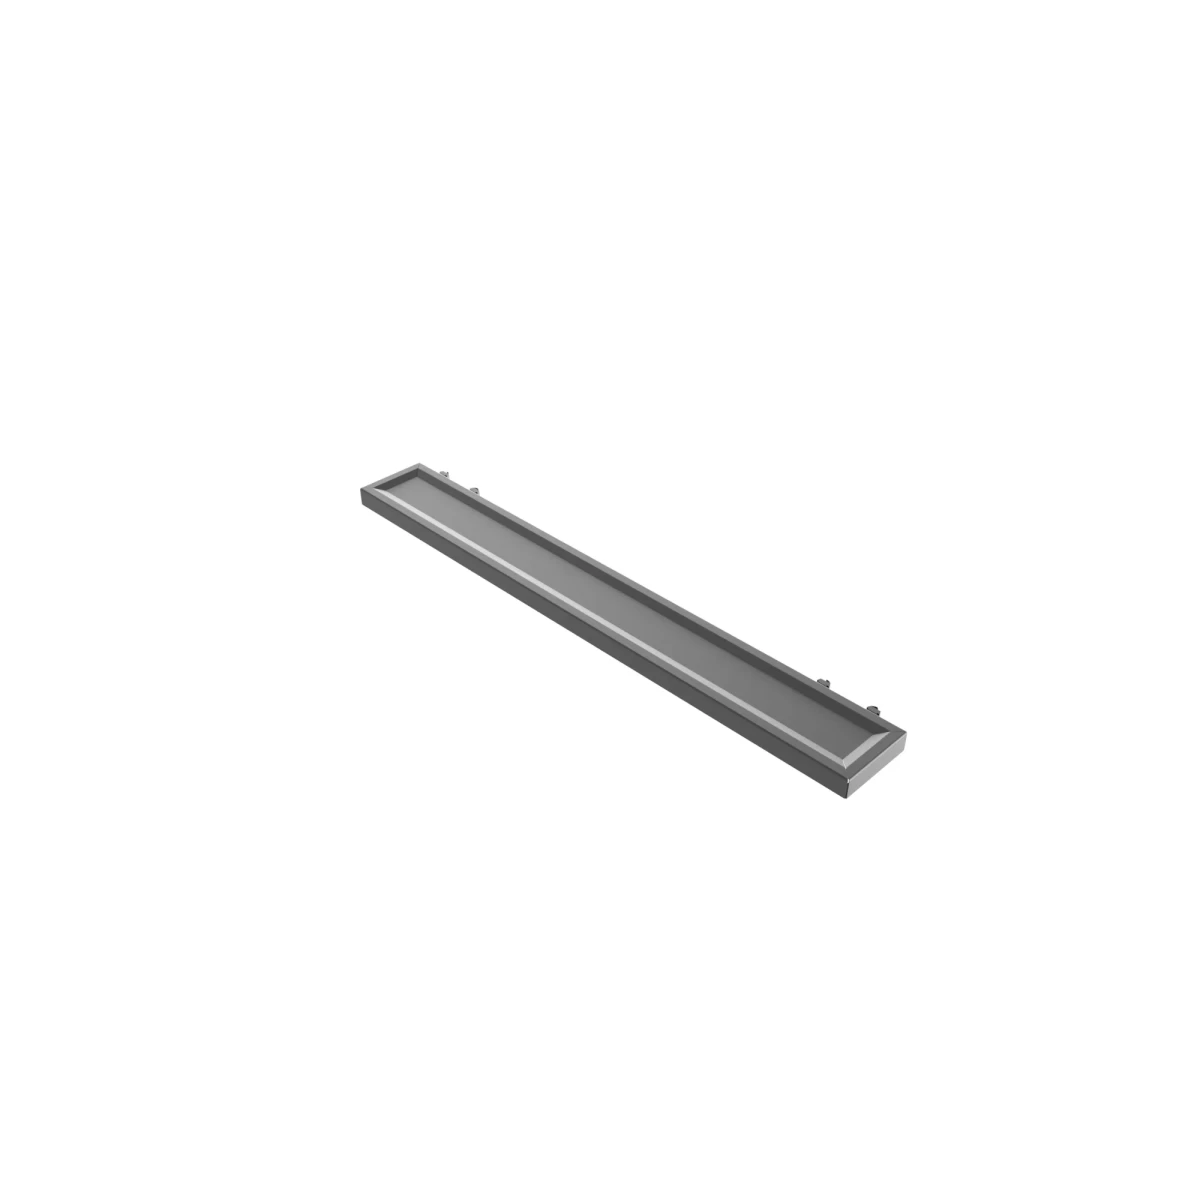 Edbak TRSMV1.002 Metal shelf for TRV200/TRV300 (shelf dimensions 746x96 mm), black